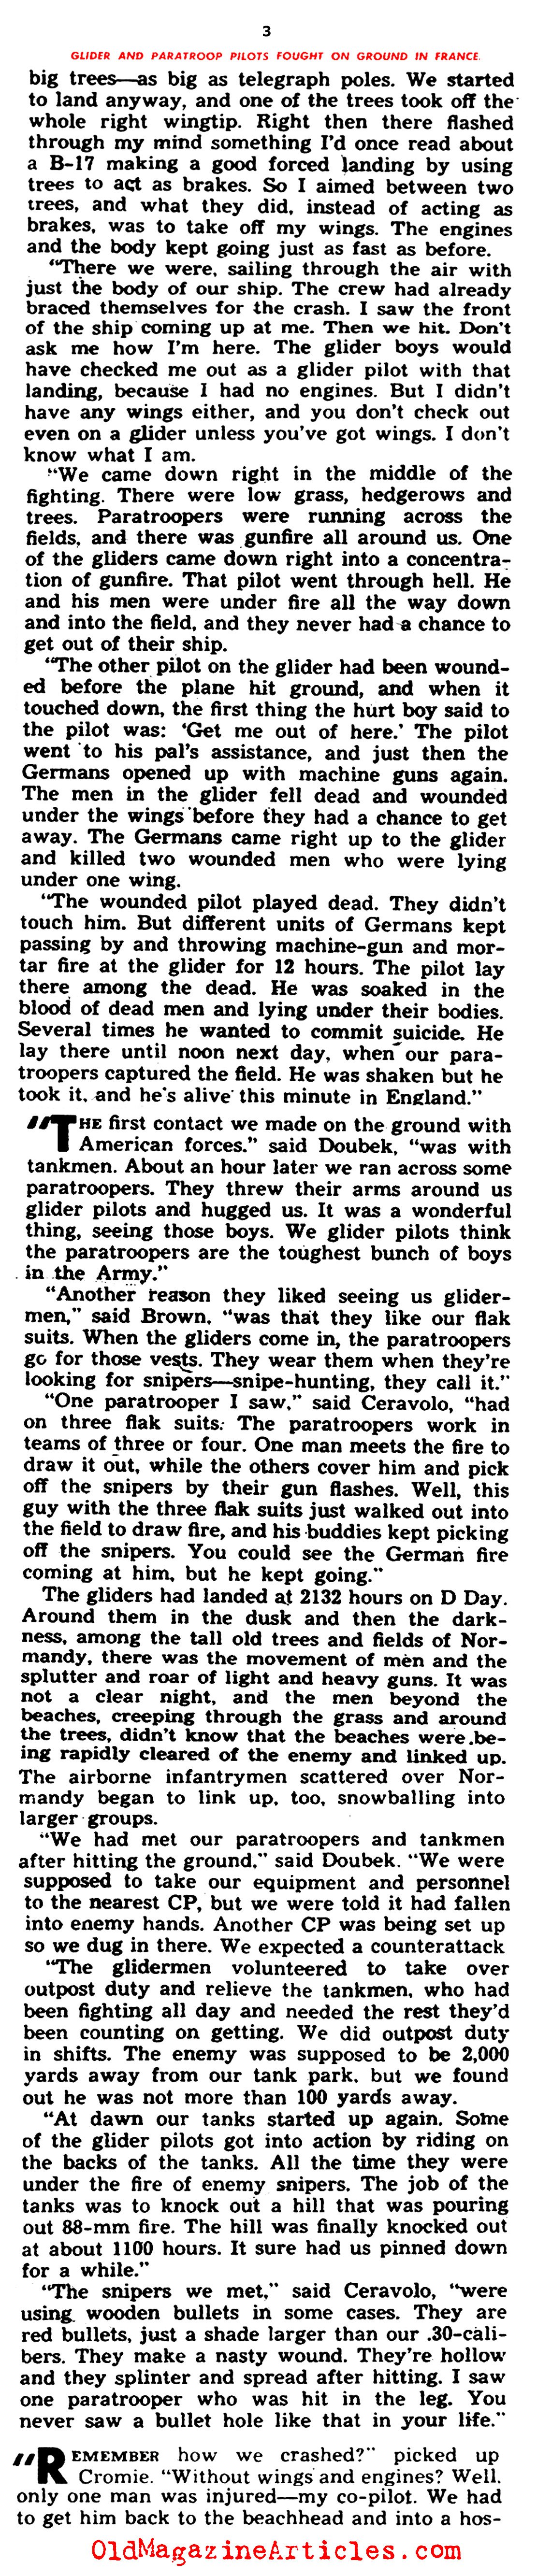 Four Glider Pilots on D-Day (Yank Magazine, 1944)